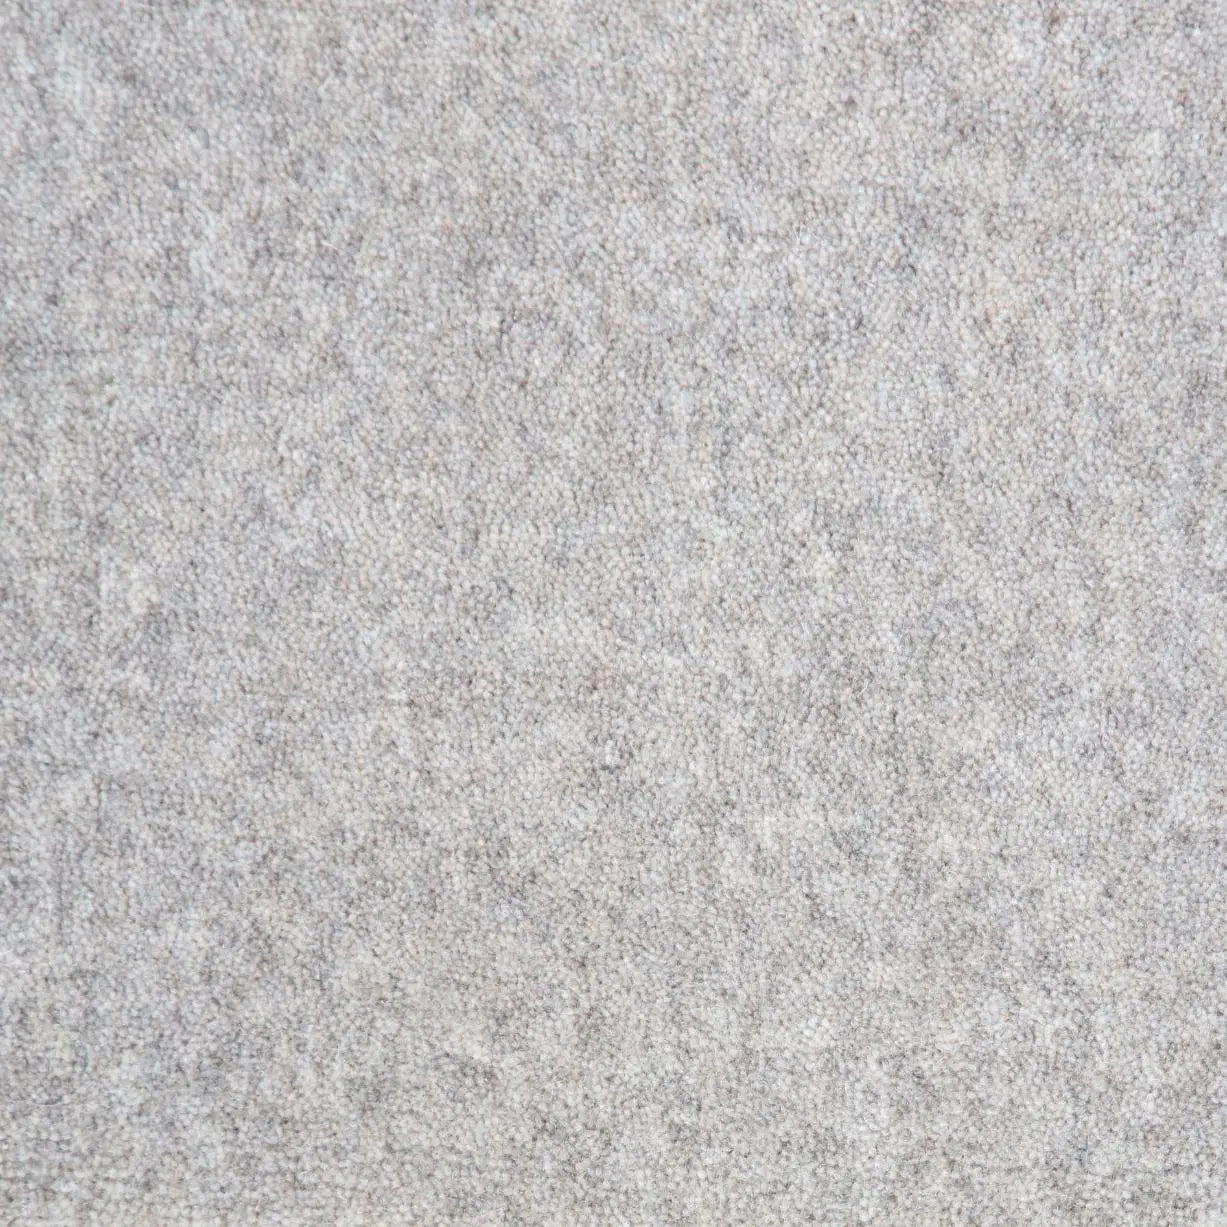 Cut Pile Marle Grey Wool Carpet